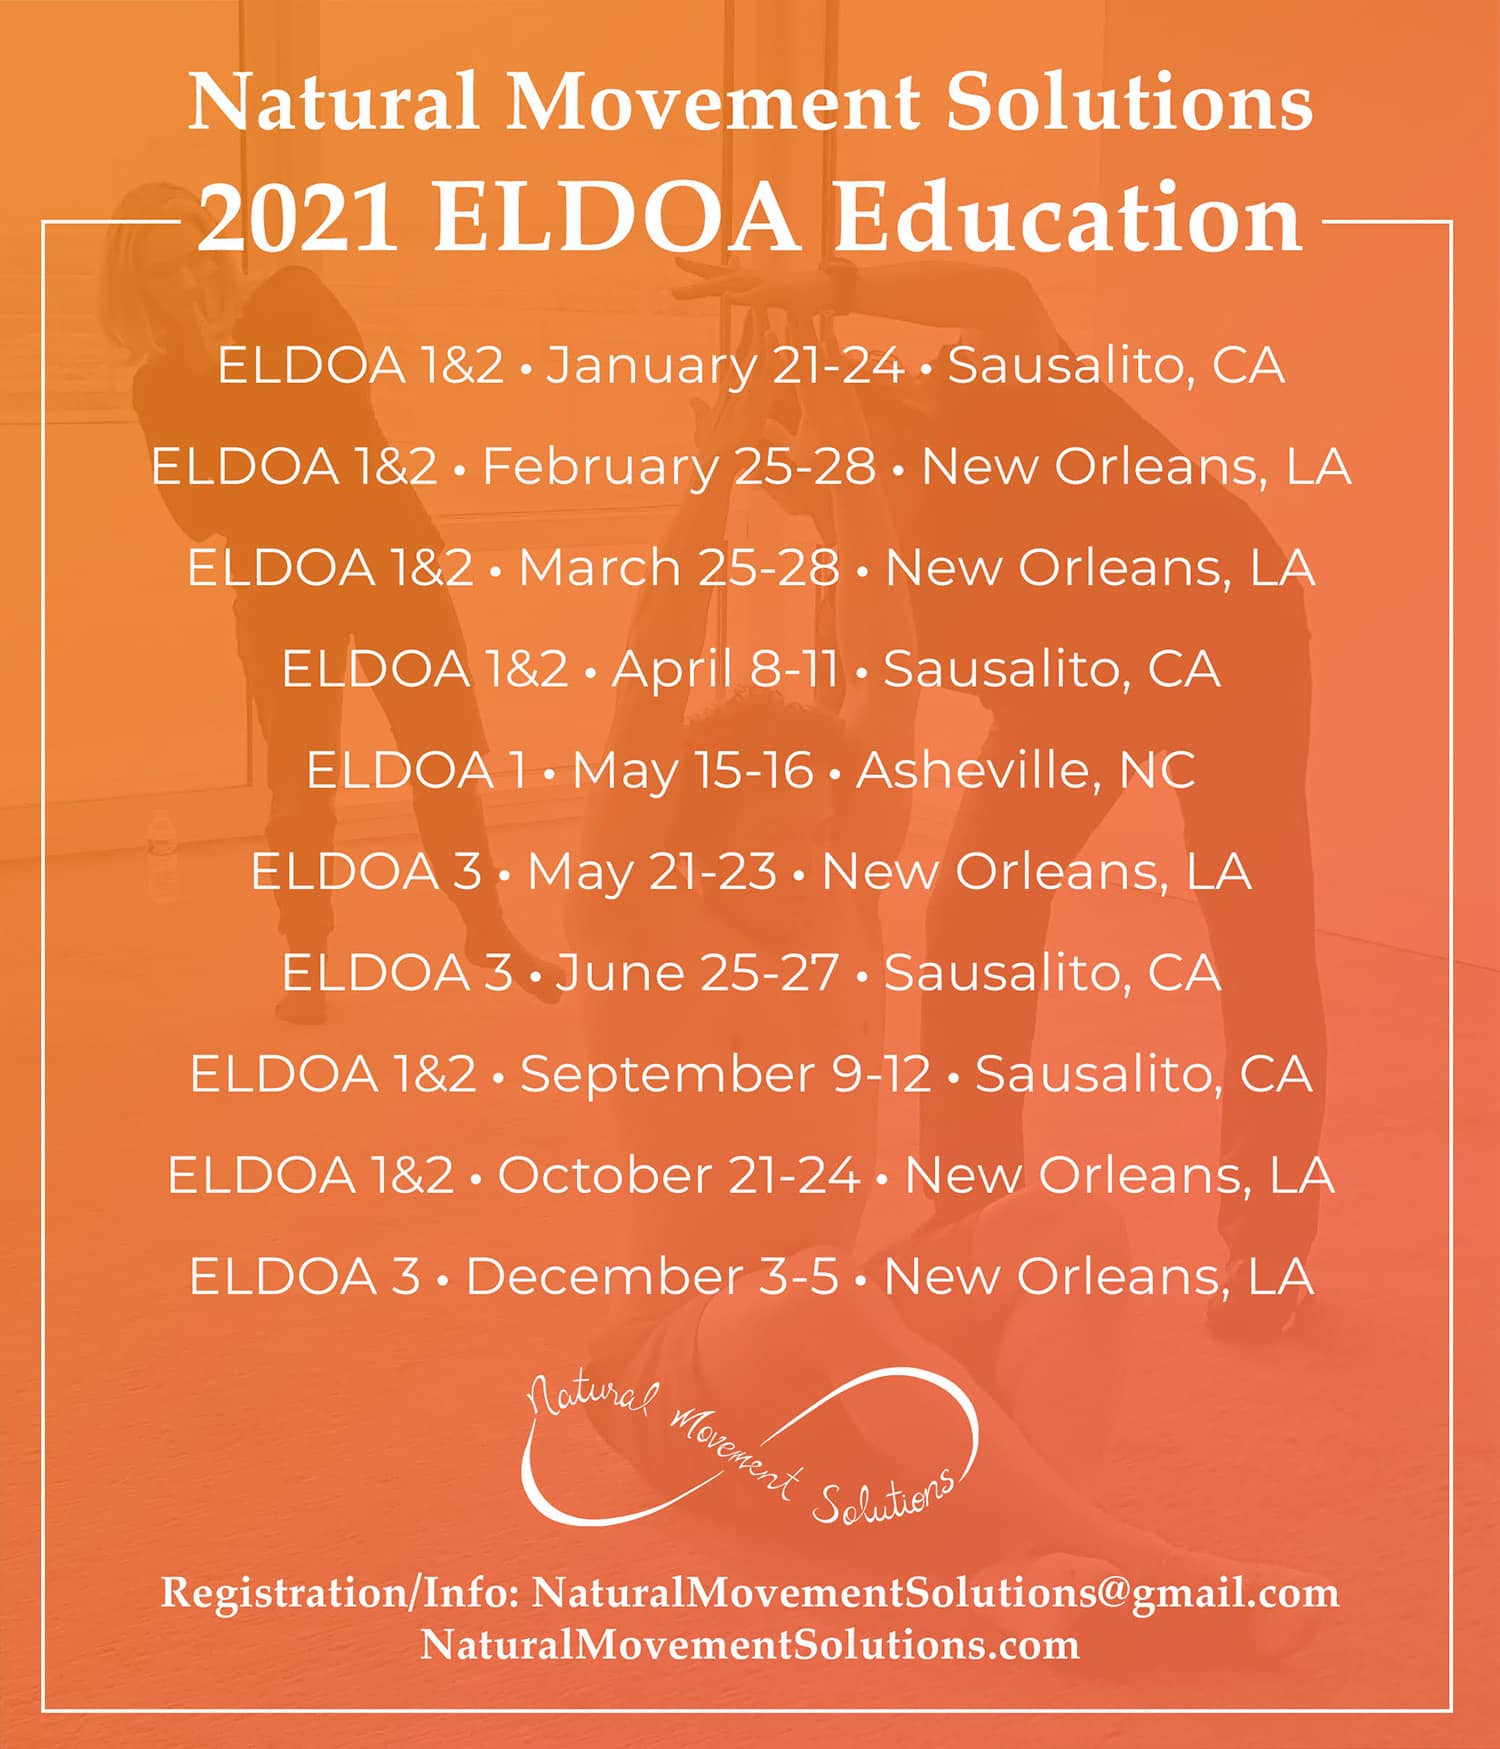 ELDOA-Education